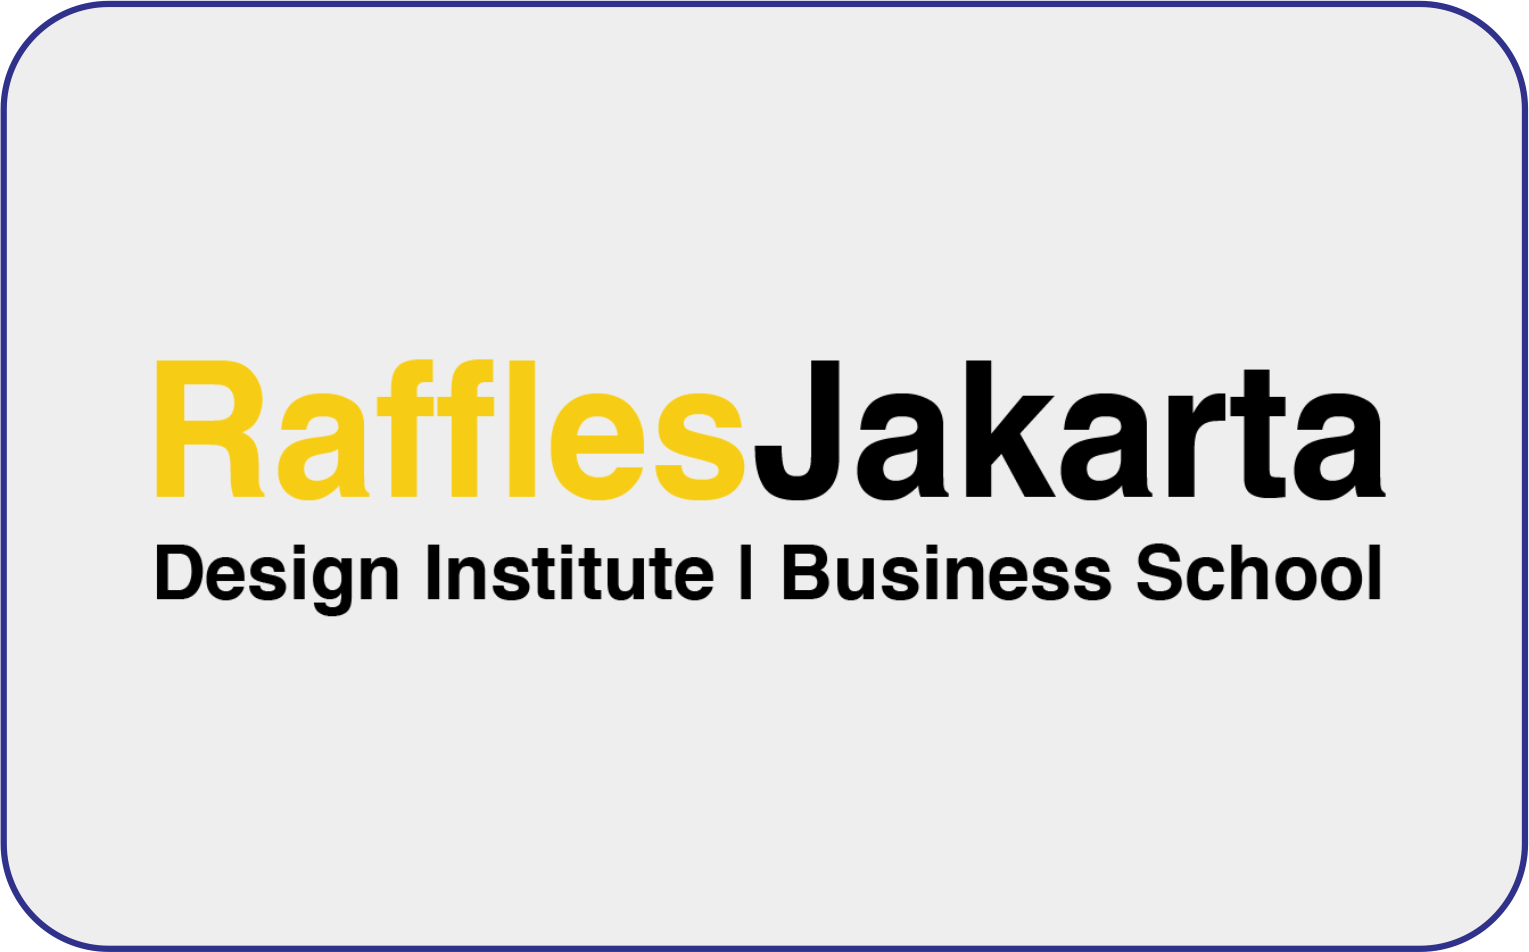 RAFFLES DESIGN INSTITUTE JAKARTA